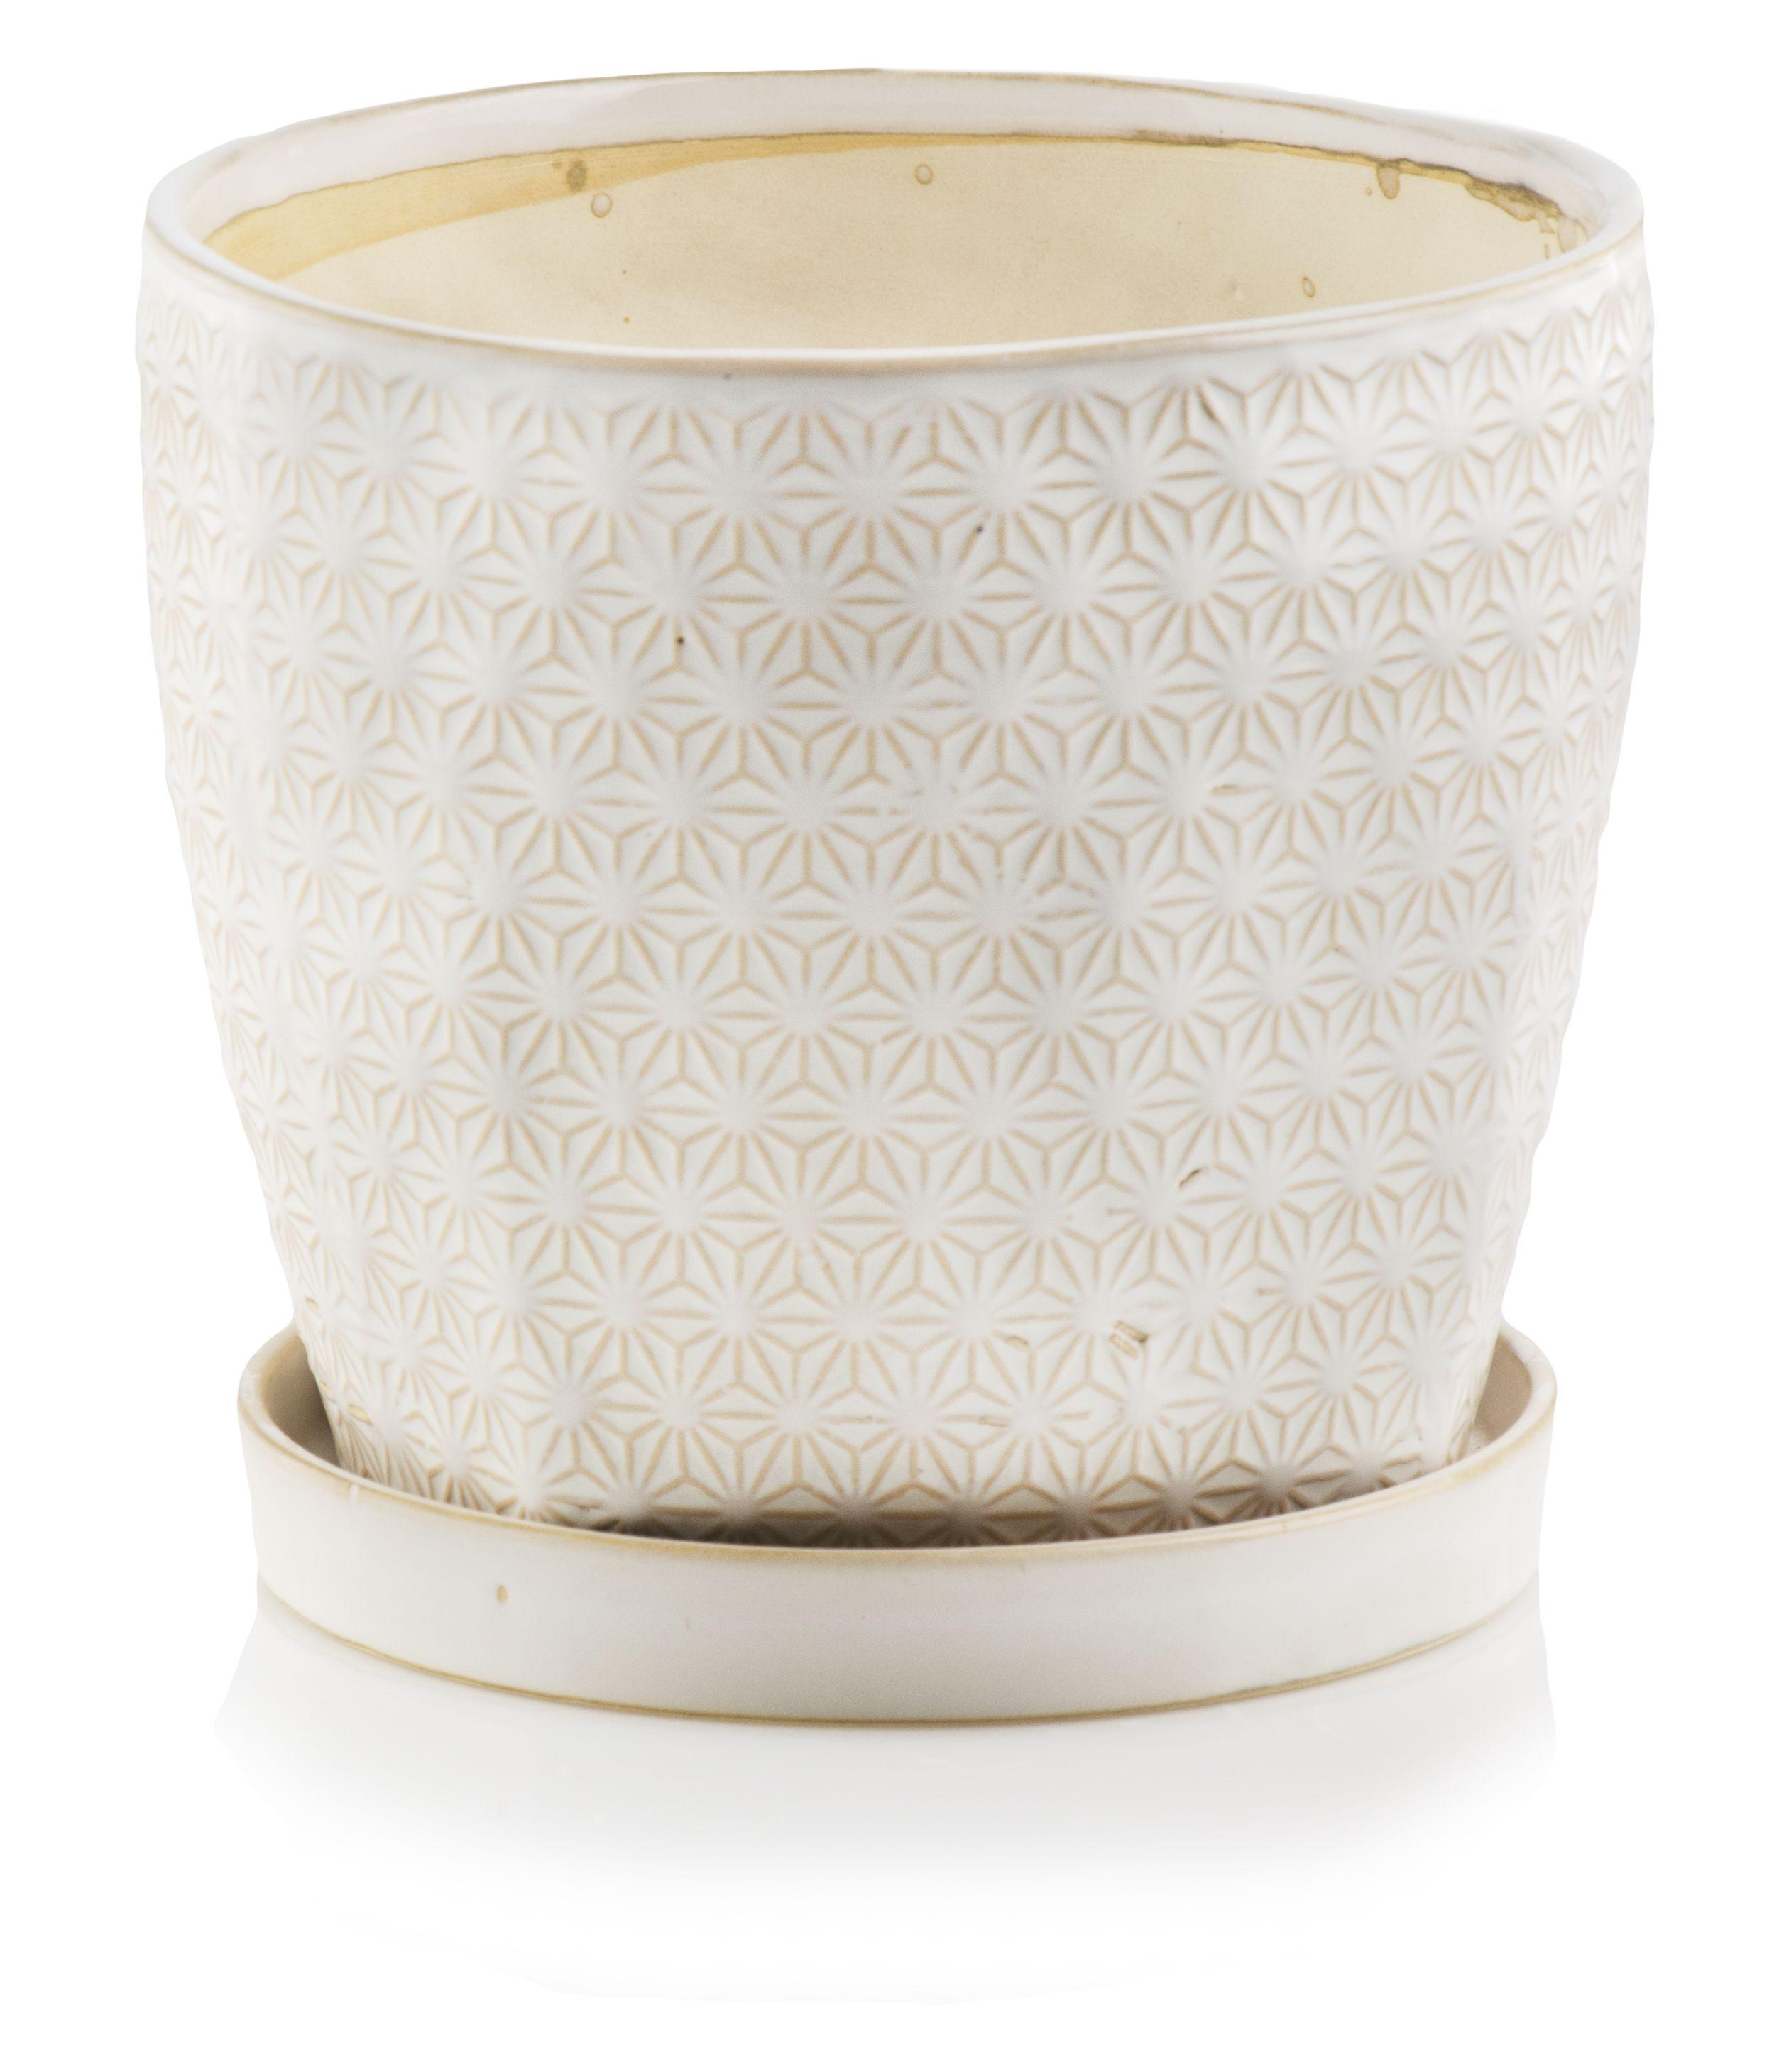 Round glazed ceramic pot - 16 cm - VINTAGE collection